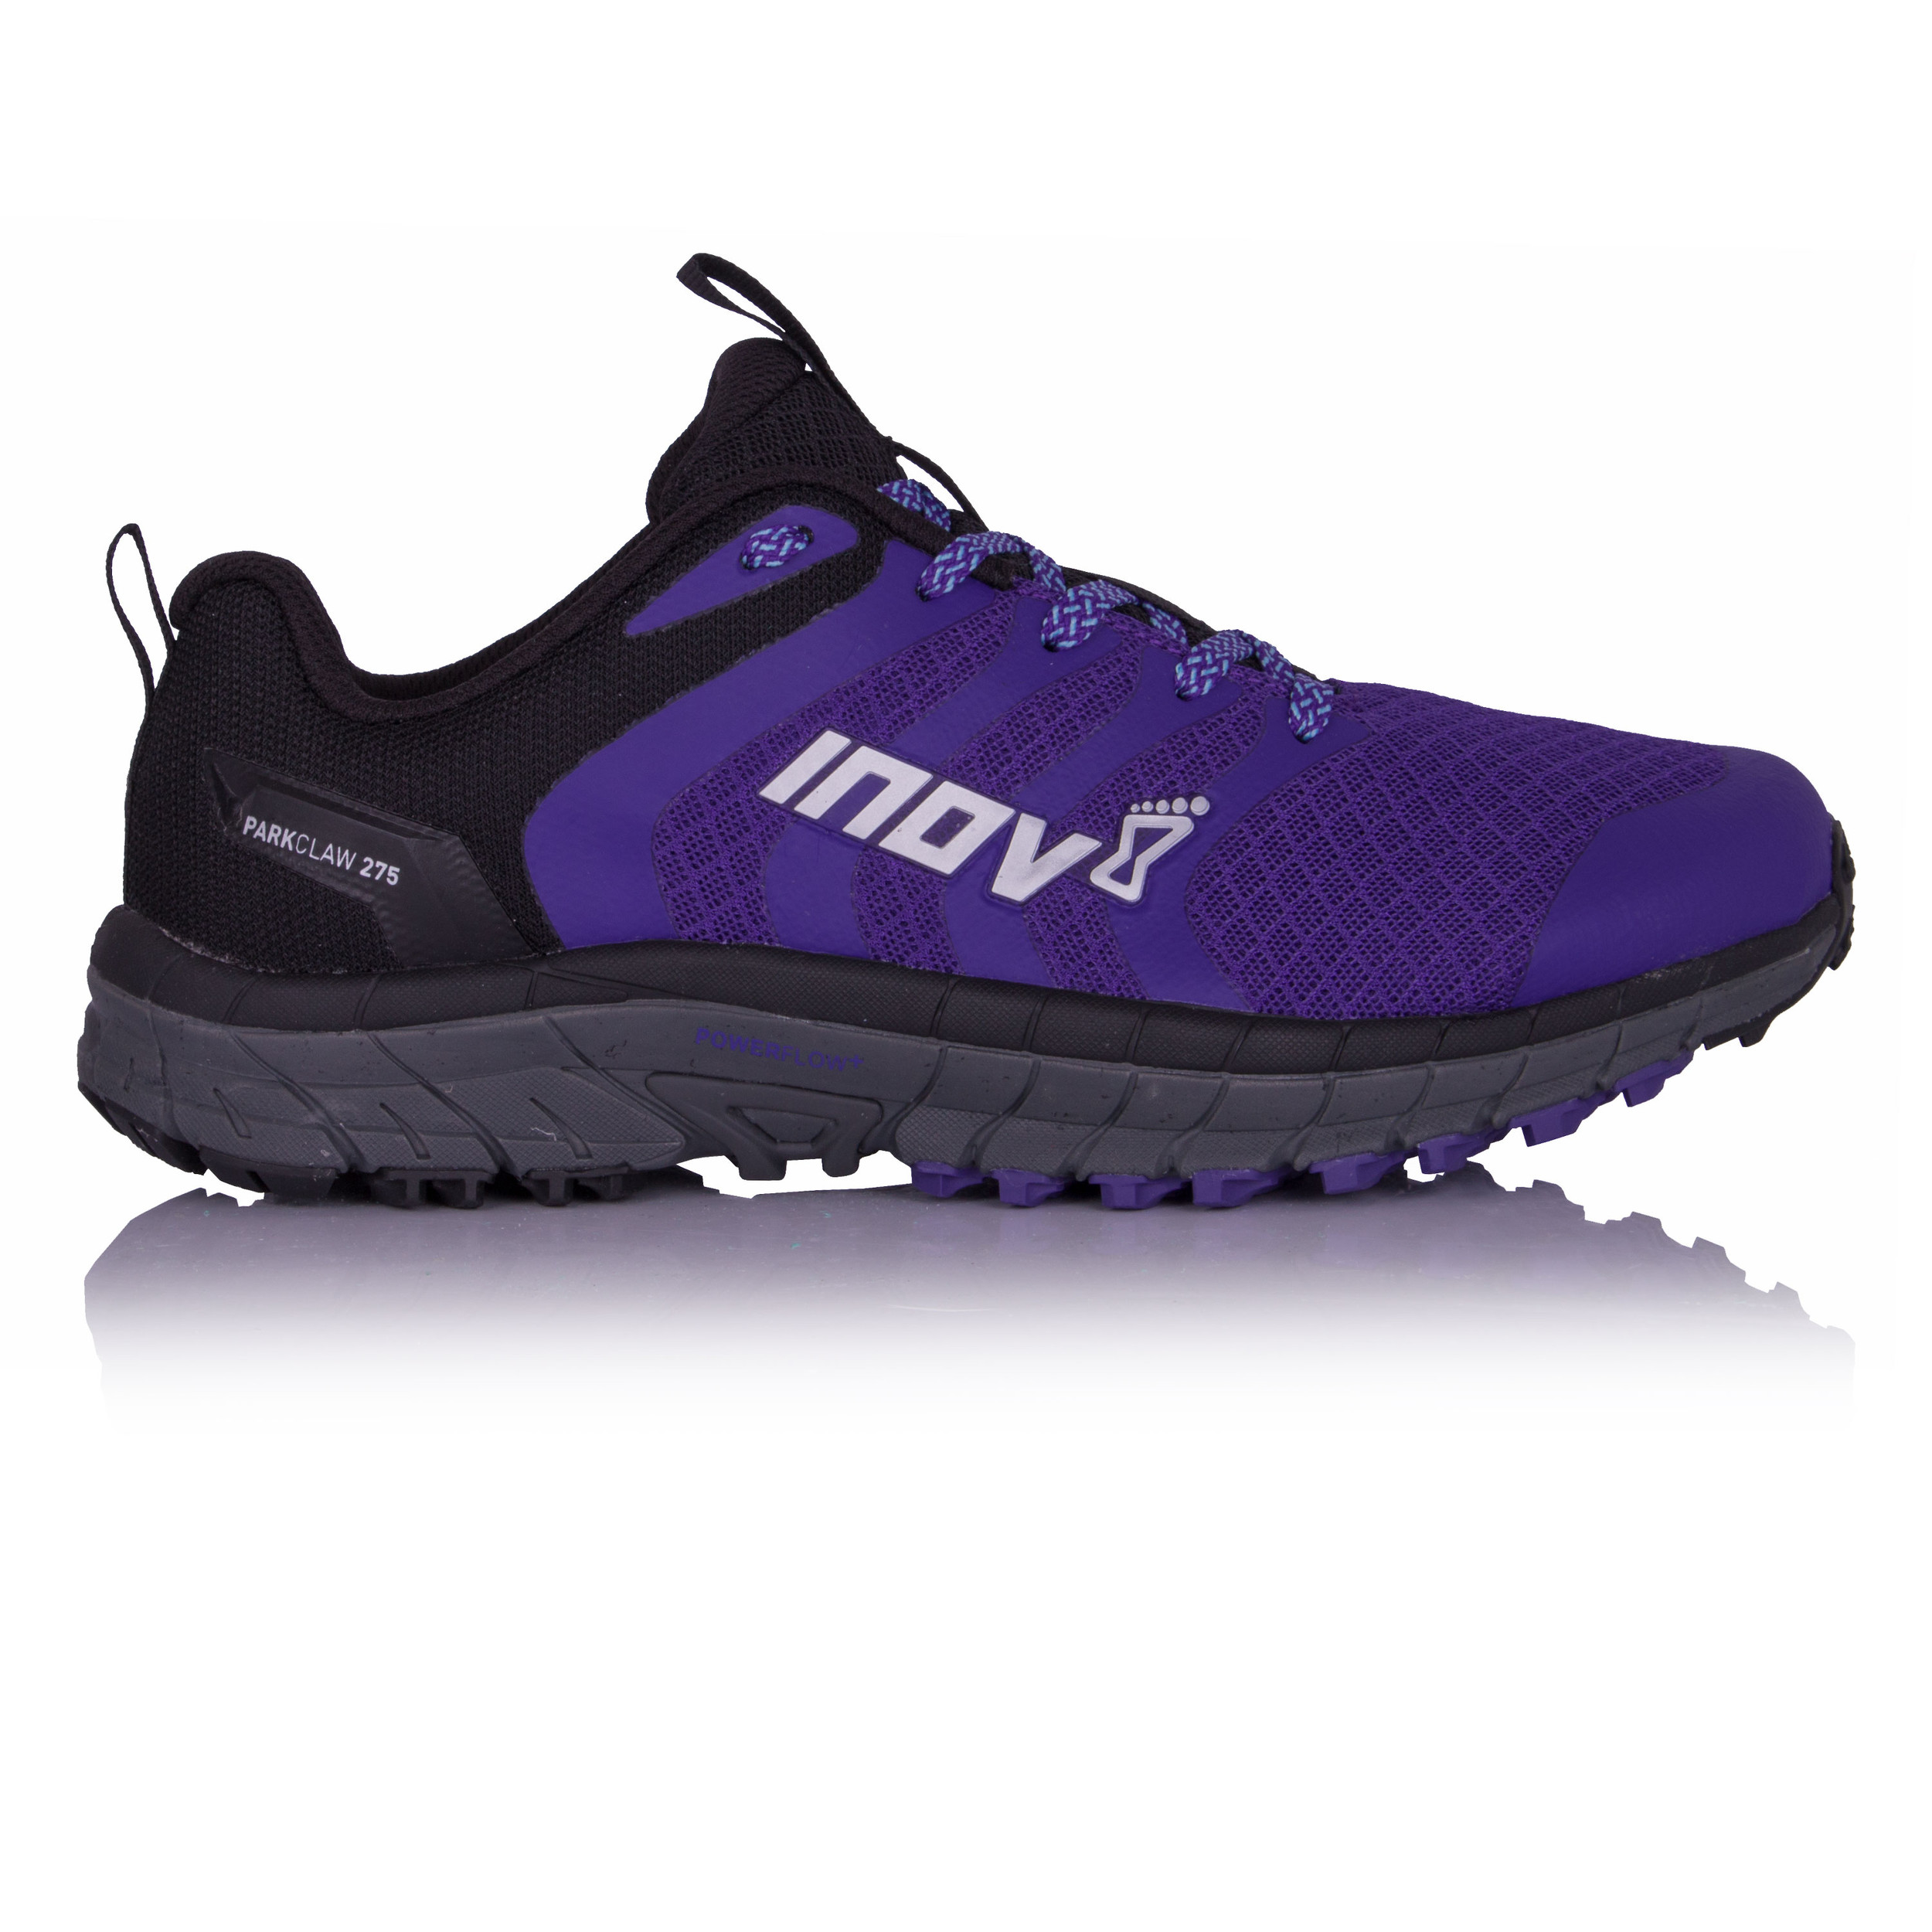 Inov8 Park Claw 275 zapatillas de running para mujer- AW17